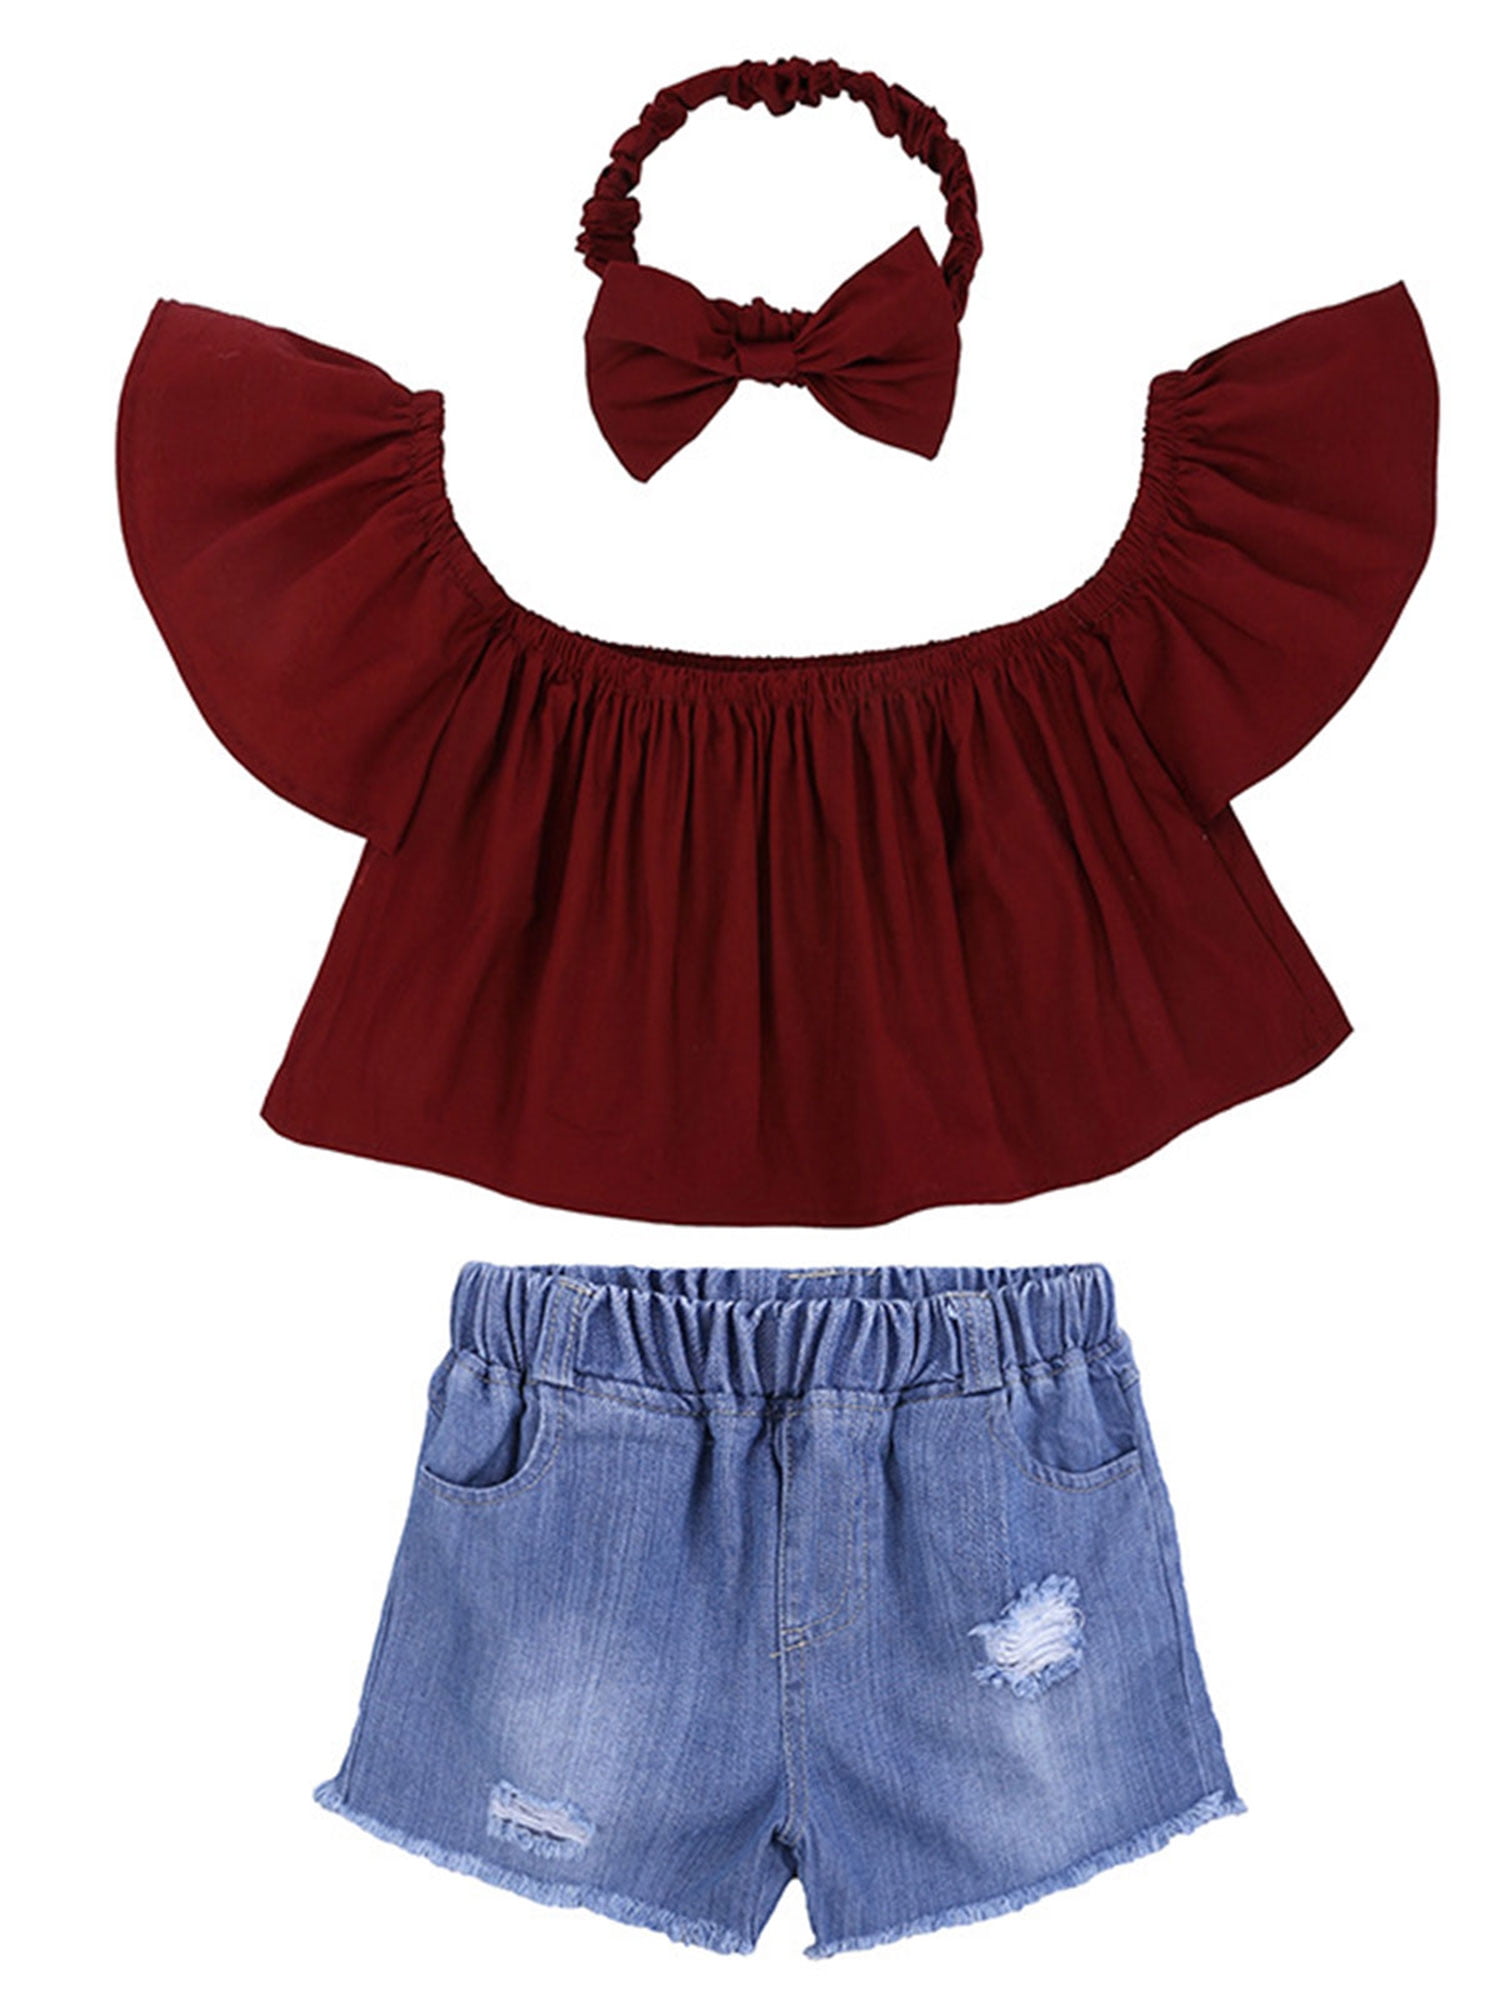 Xingqing 3pcs Baby Girl Short Sleeve Tops Ripped Denim Shorts With Headband Summer Outft Walmart Com Walmart Com